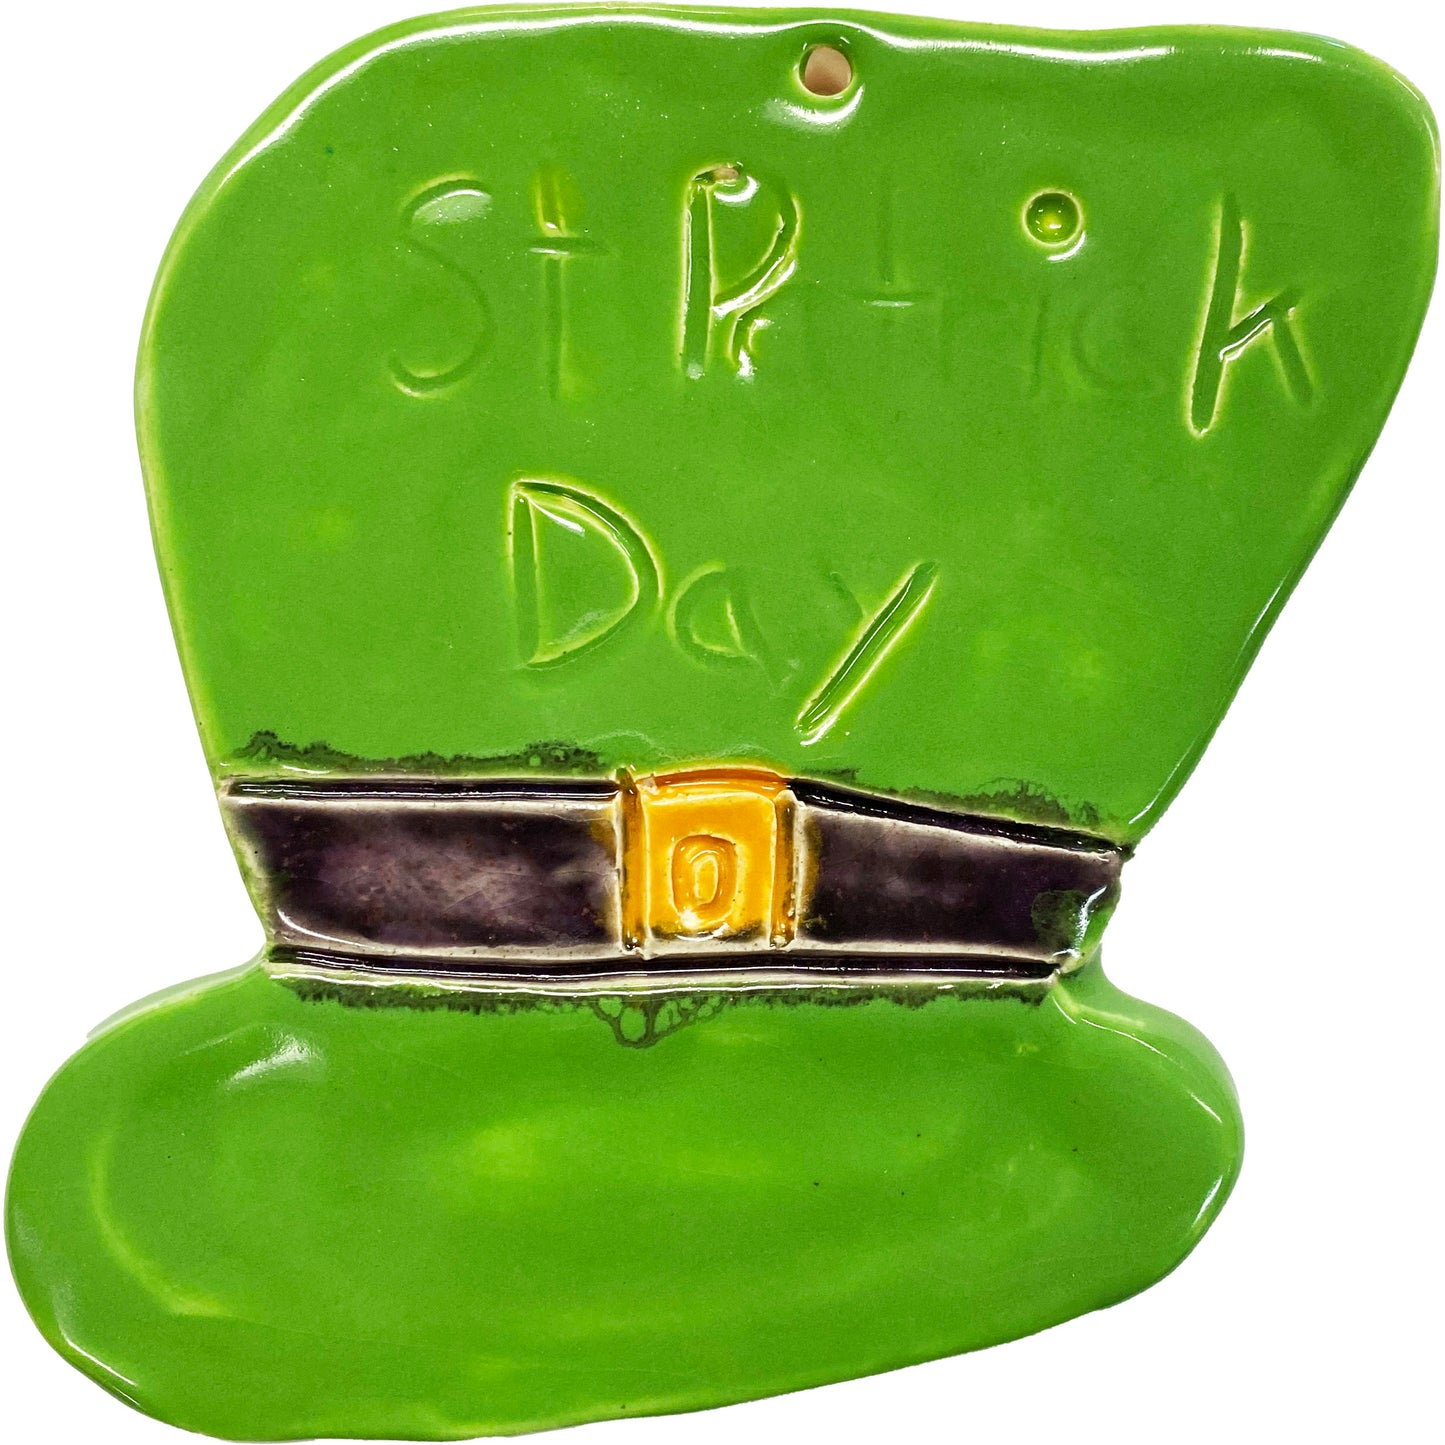 Ceramic Arts Handmade Clay Crafts Glazed 6-inch x 5-inch St. Patricks Day Hat made by Jim Wilbanks